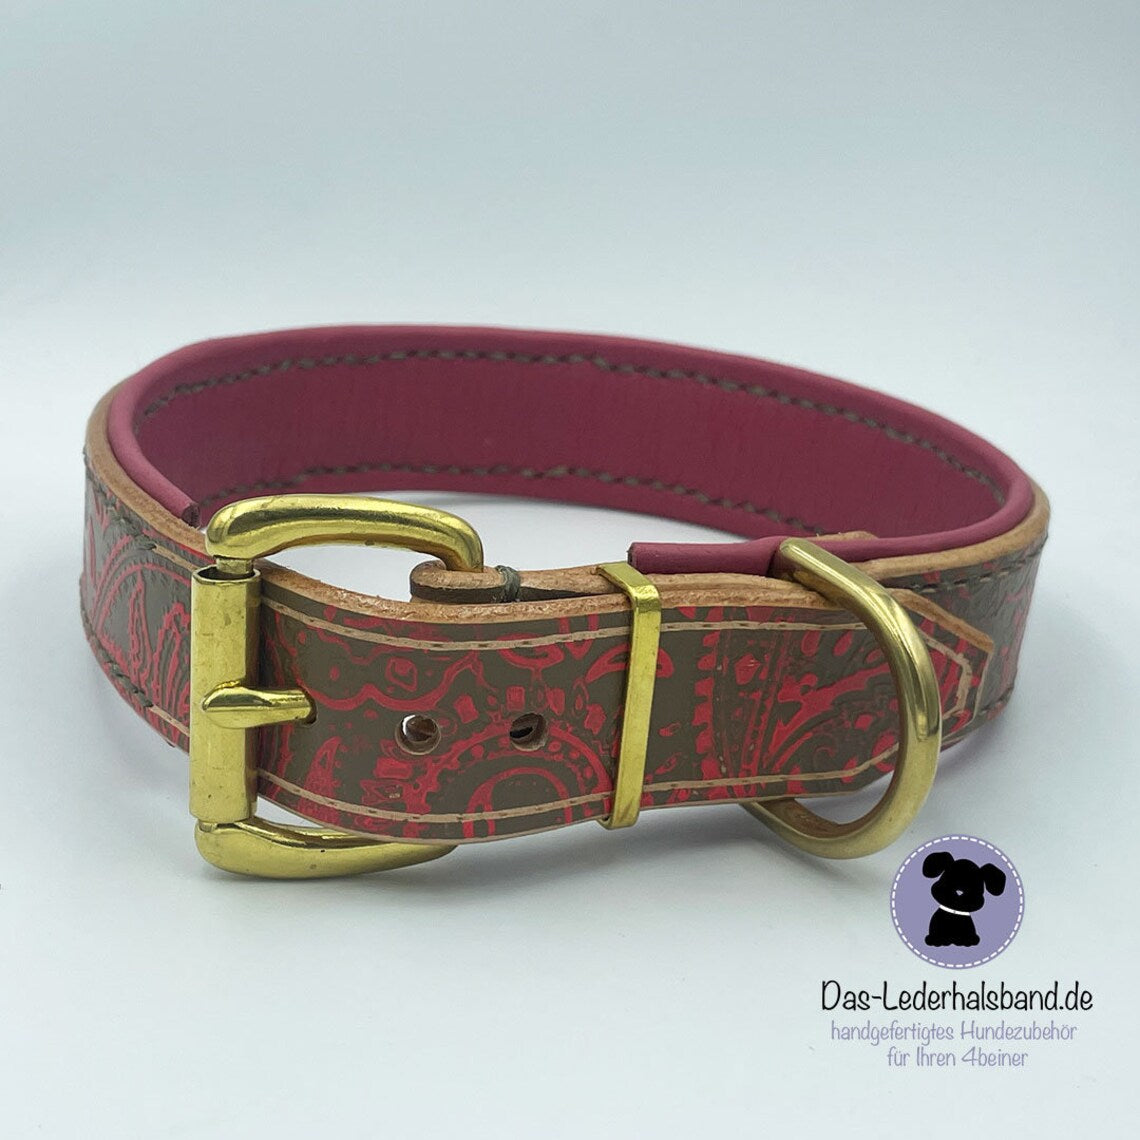 Unikat - geprägtes Lederhalsband 41-44cm - taupe-rosa